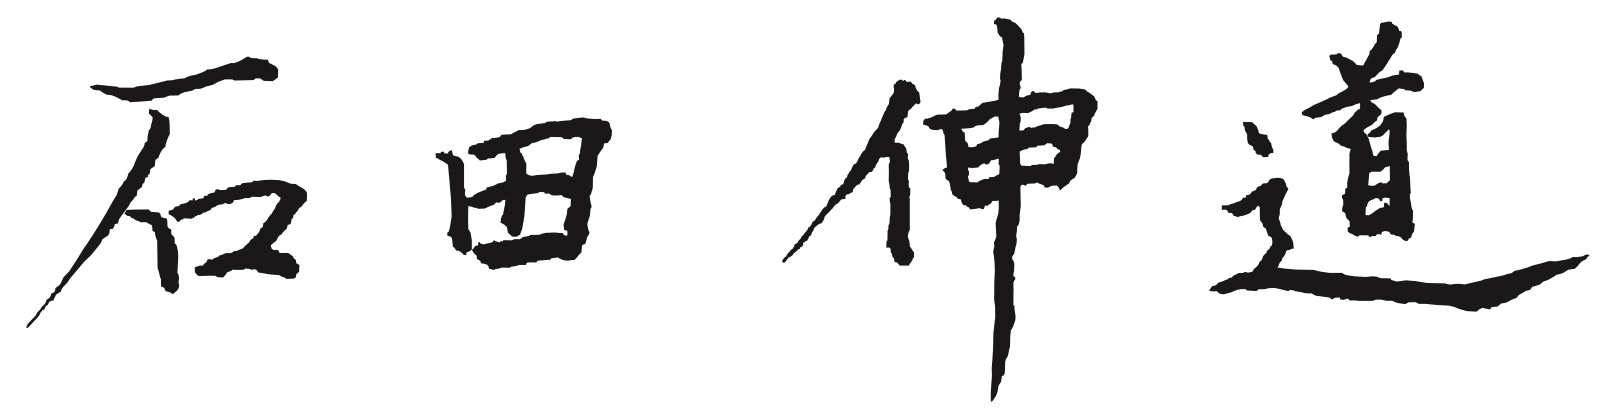 ceo-kanji